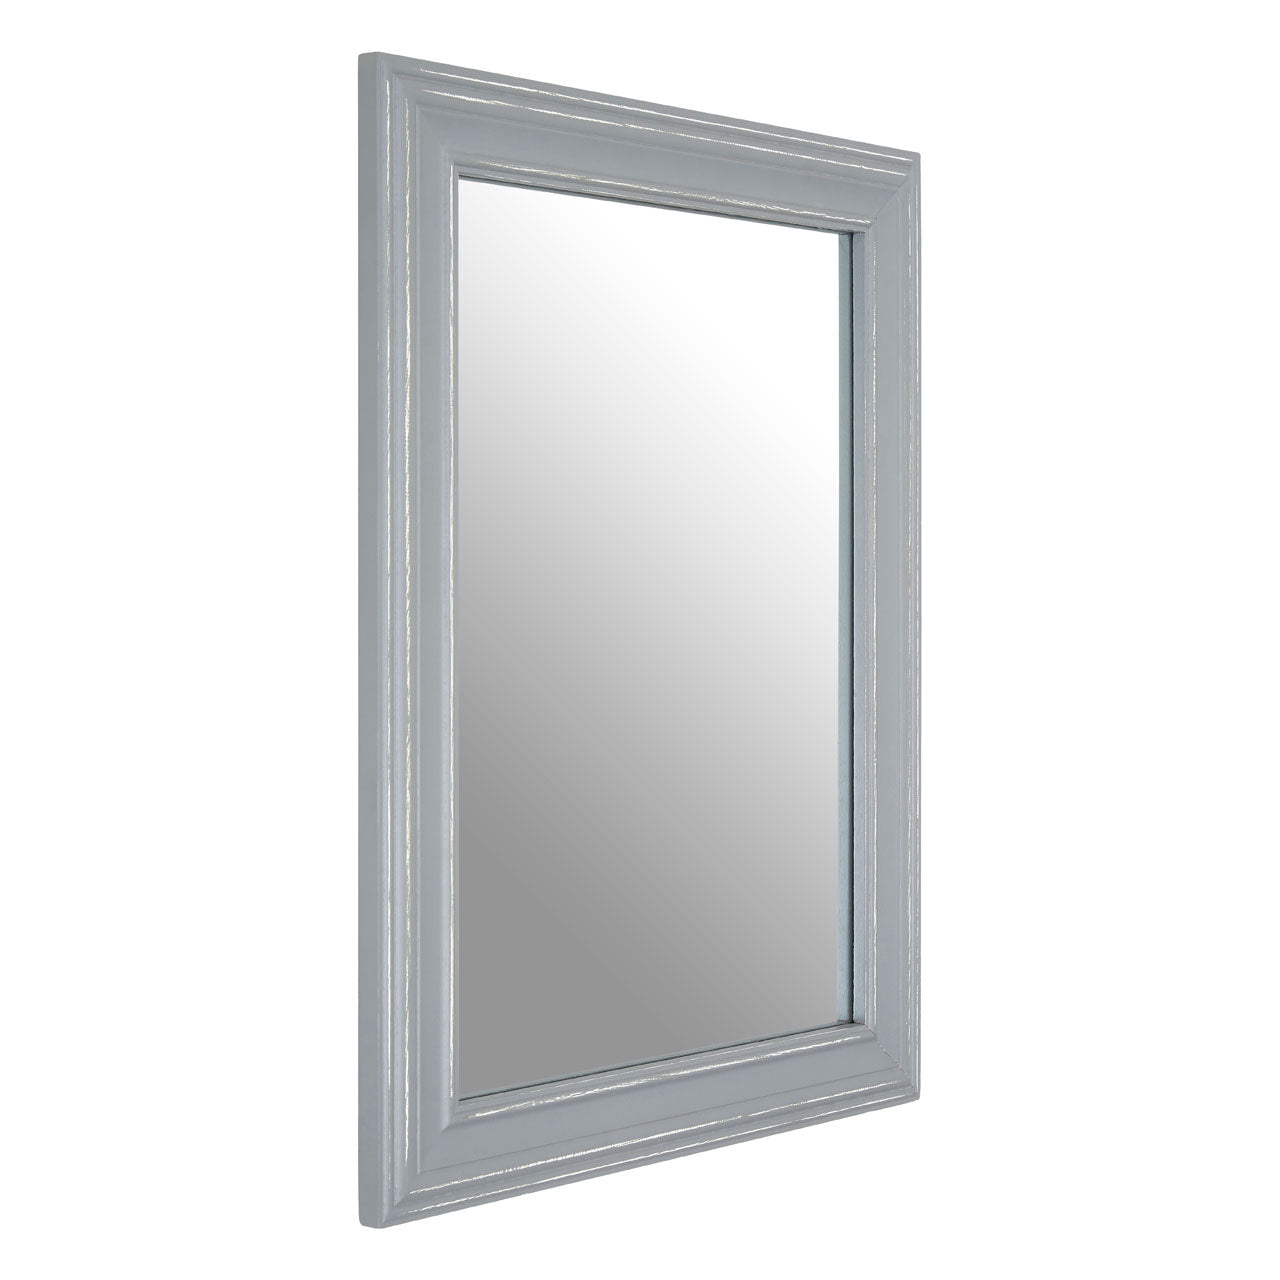 Henley Grey Wooden Frame Wall Mirror